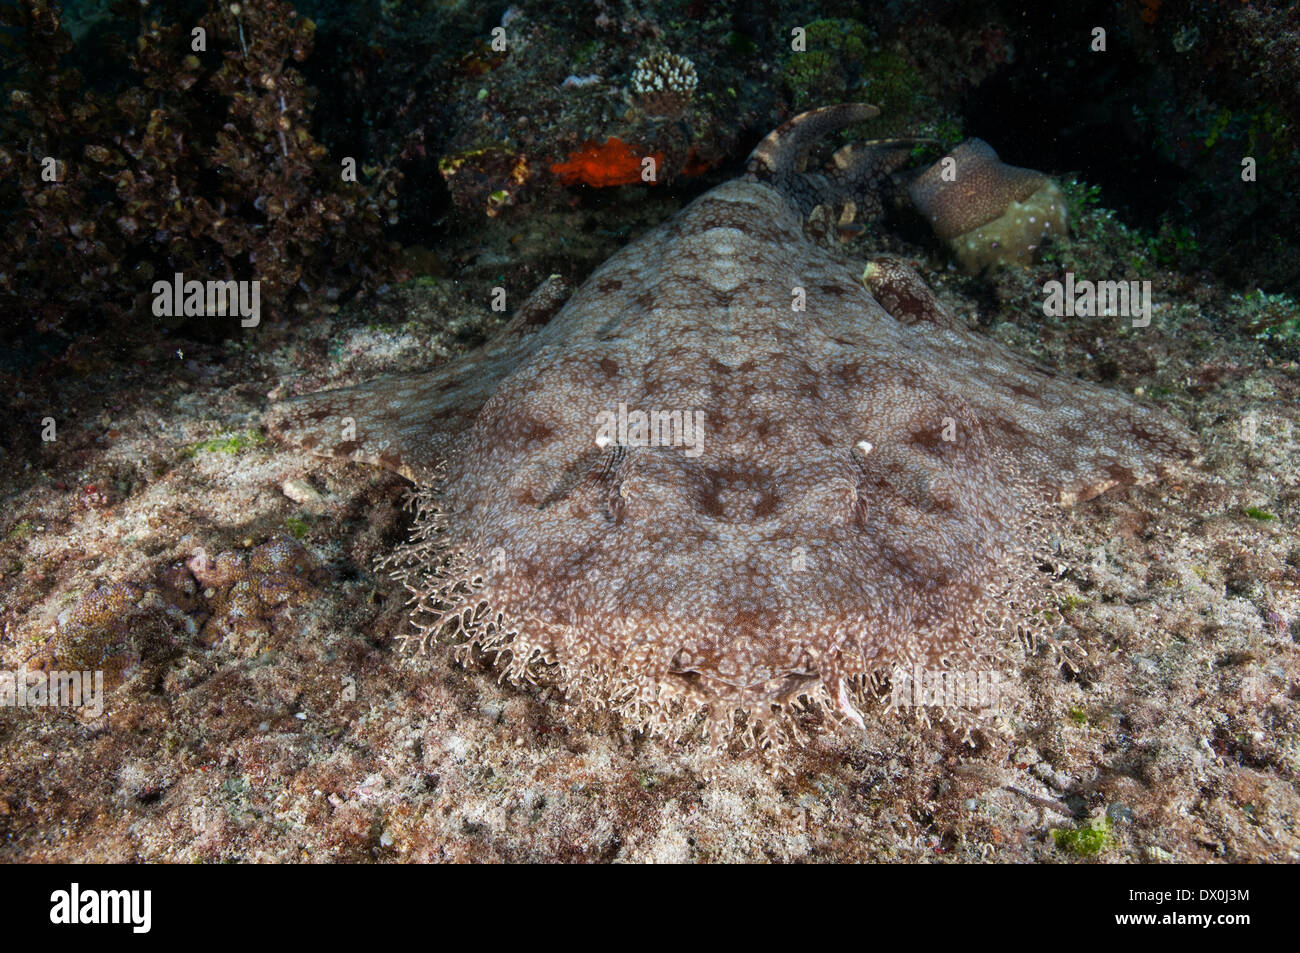 Tasselled wobbegong, Eucrossorhinus dasypogon, Raja Ampat Indonesia Stock Photo